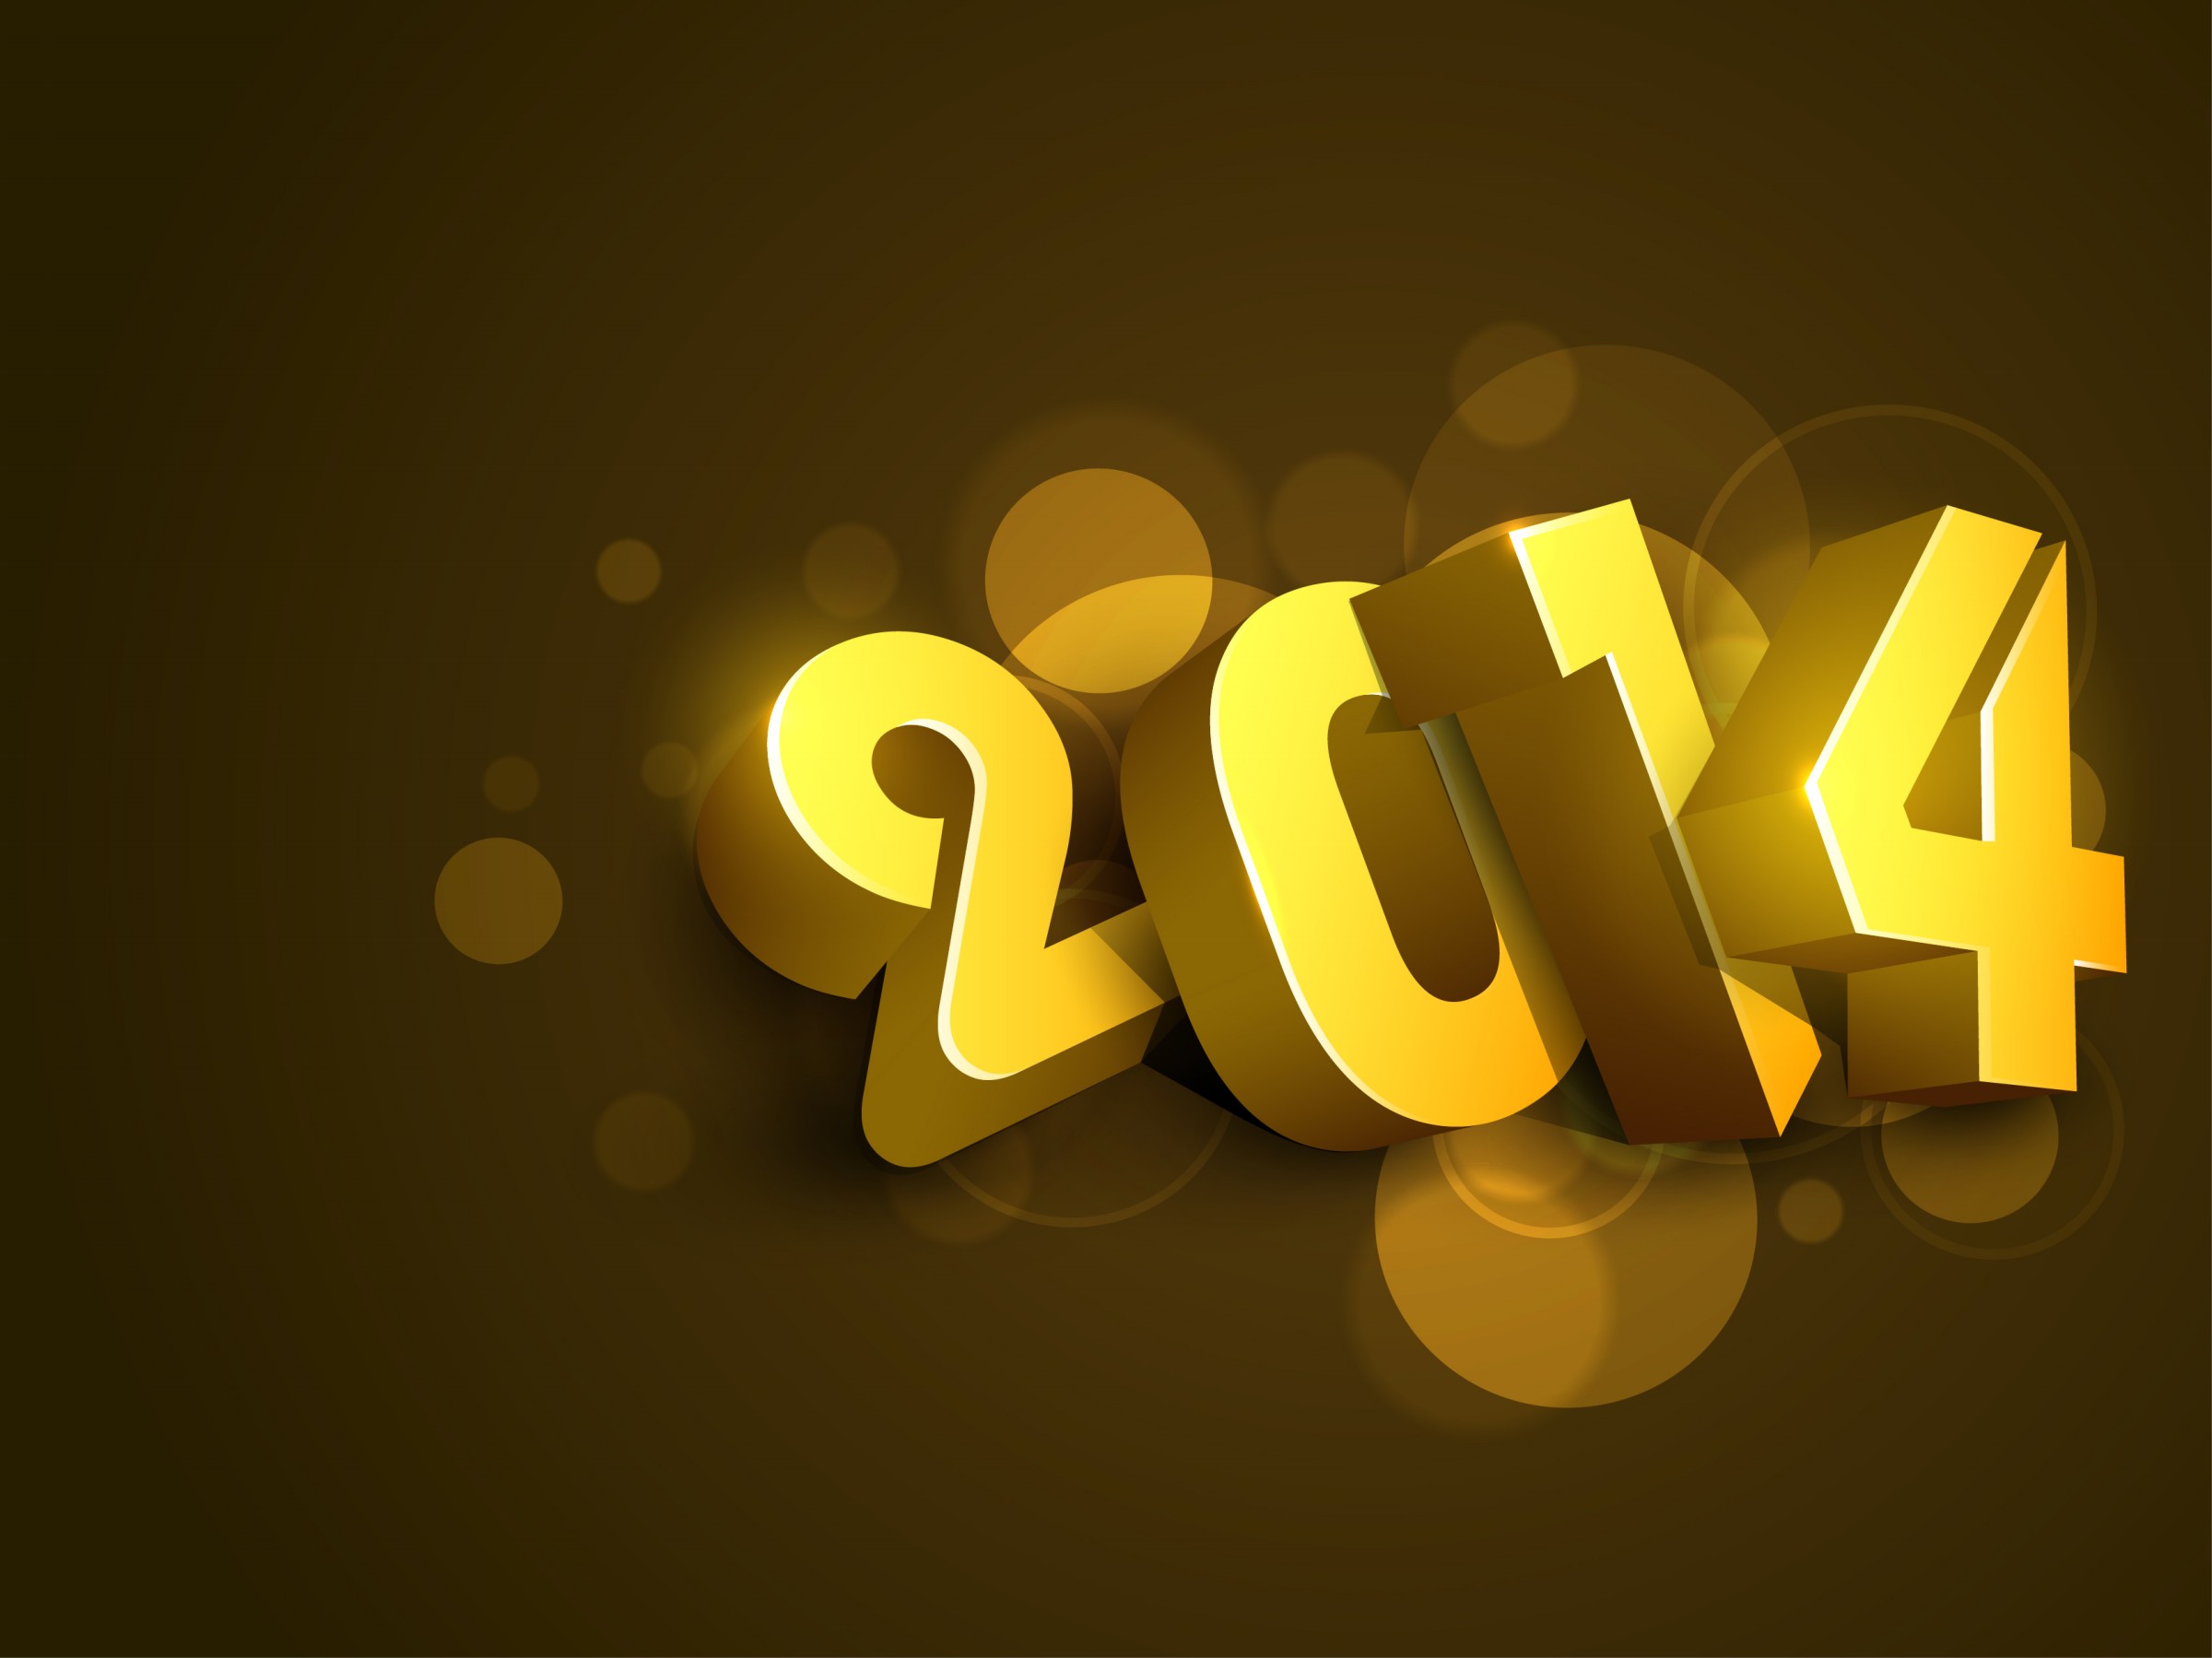 2014 год 2015 год тыс. 2014 Год картинка. Картинки 2014. 2014 Год надпись. Обои 2014 года.